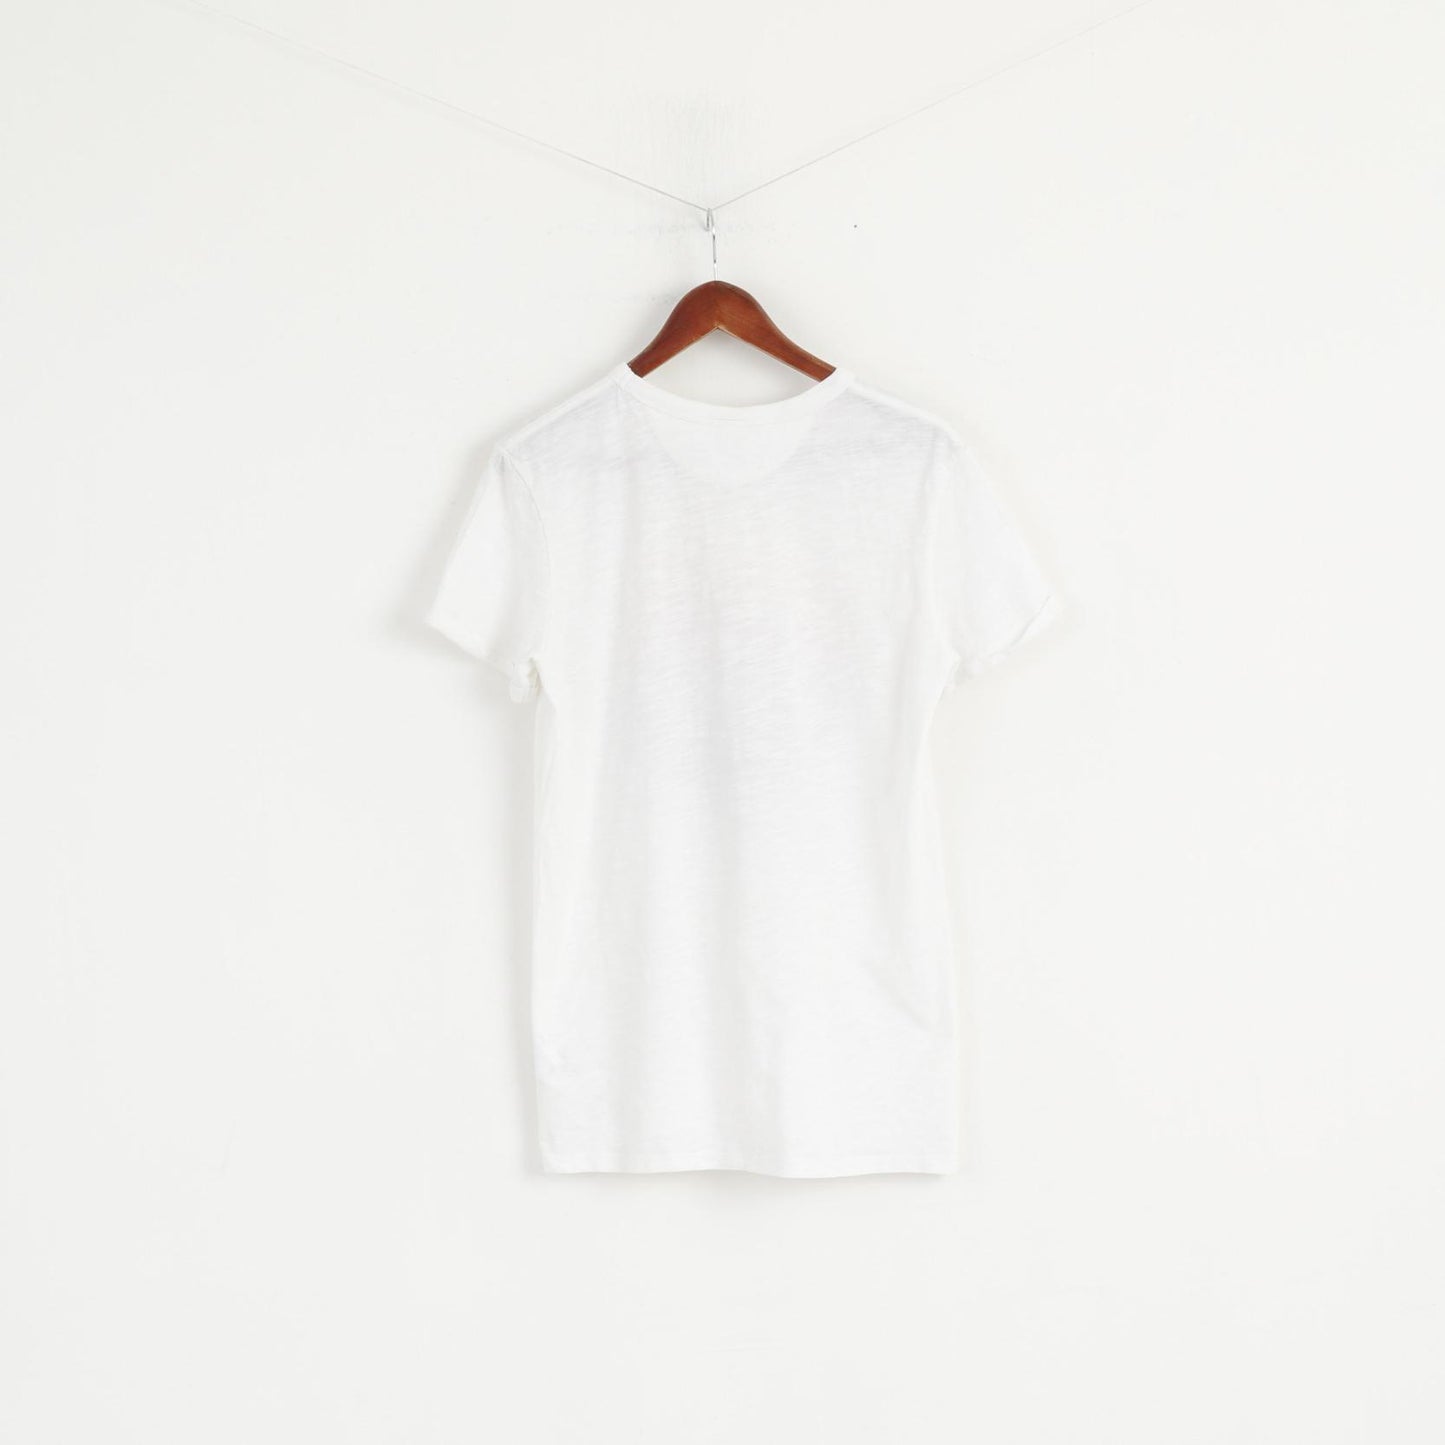 H&amp;M Jonas Claesson Garçons 12-14 ans 158/164 T-shirt Blanc Coton Bio Surf's Top